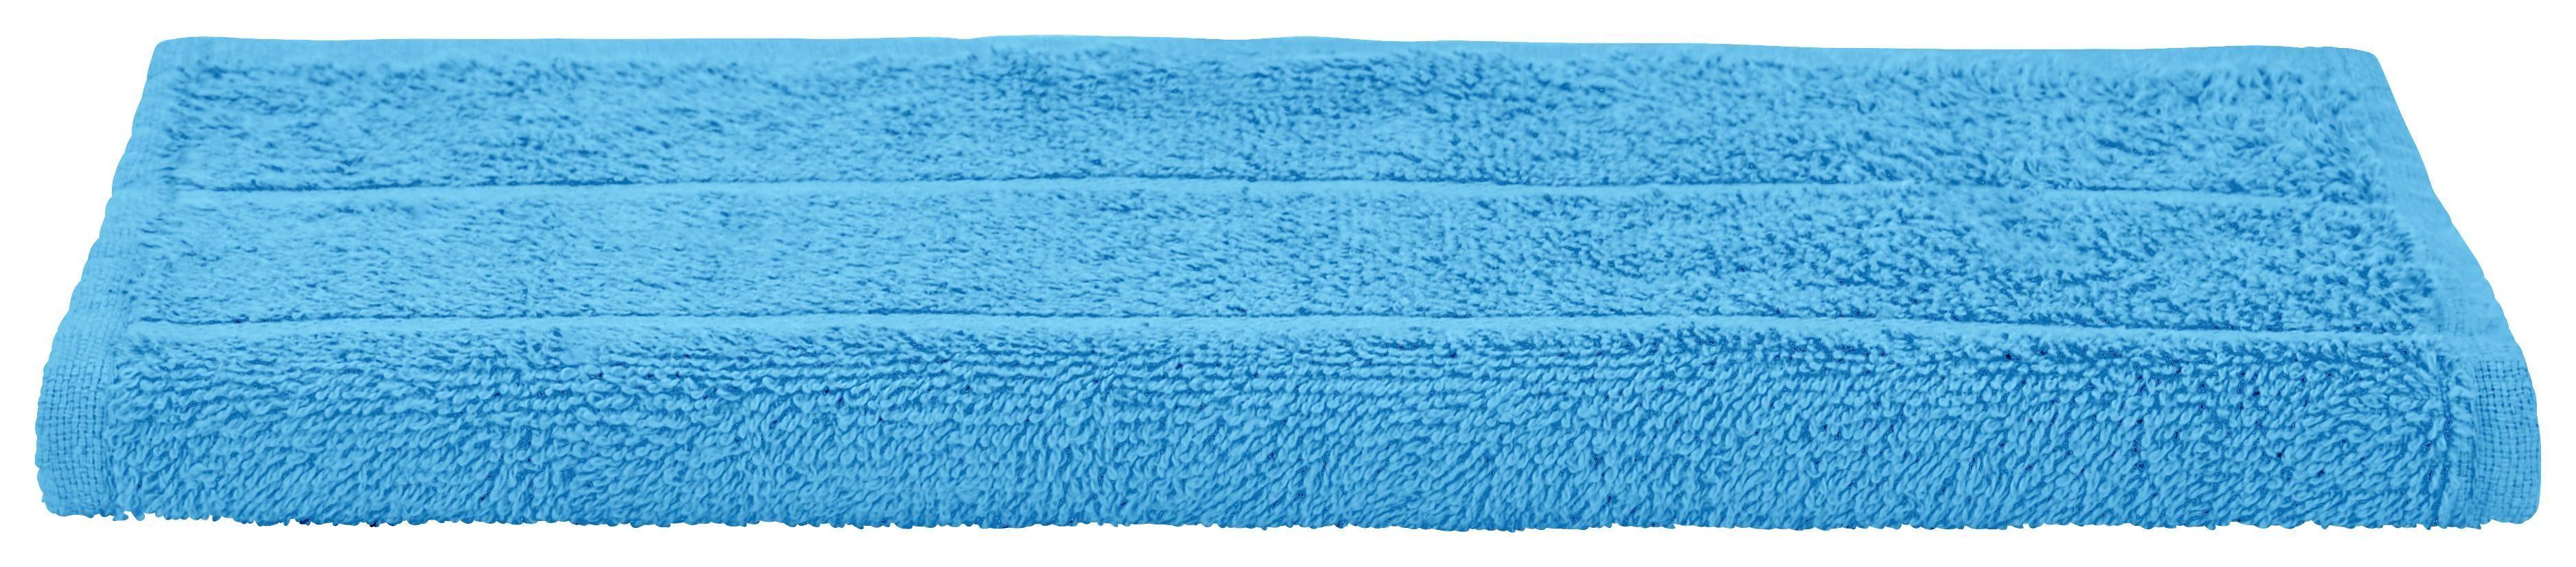 Duschtuch Liliane Baumwolle 420 G/M2 Blau 70x140 cm - Blau, KONVENTIONELL, Textil (70/140cm) - Ondega